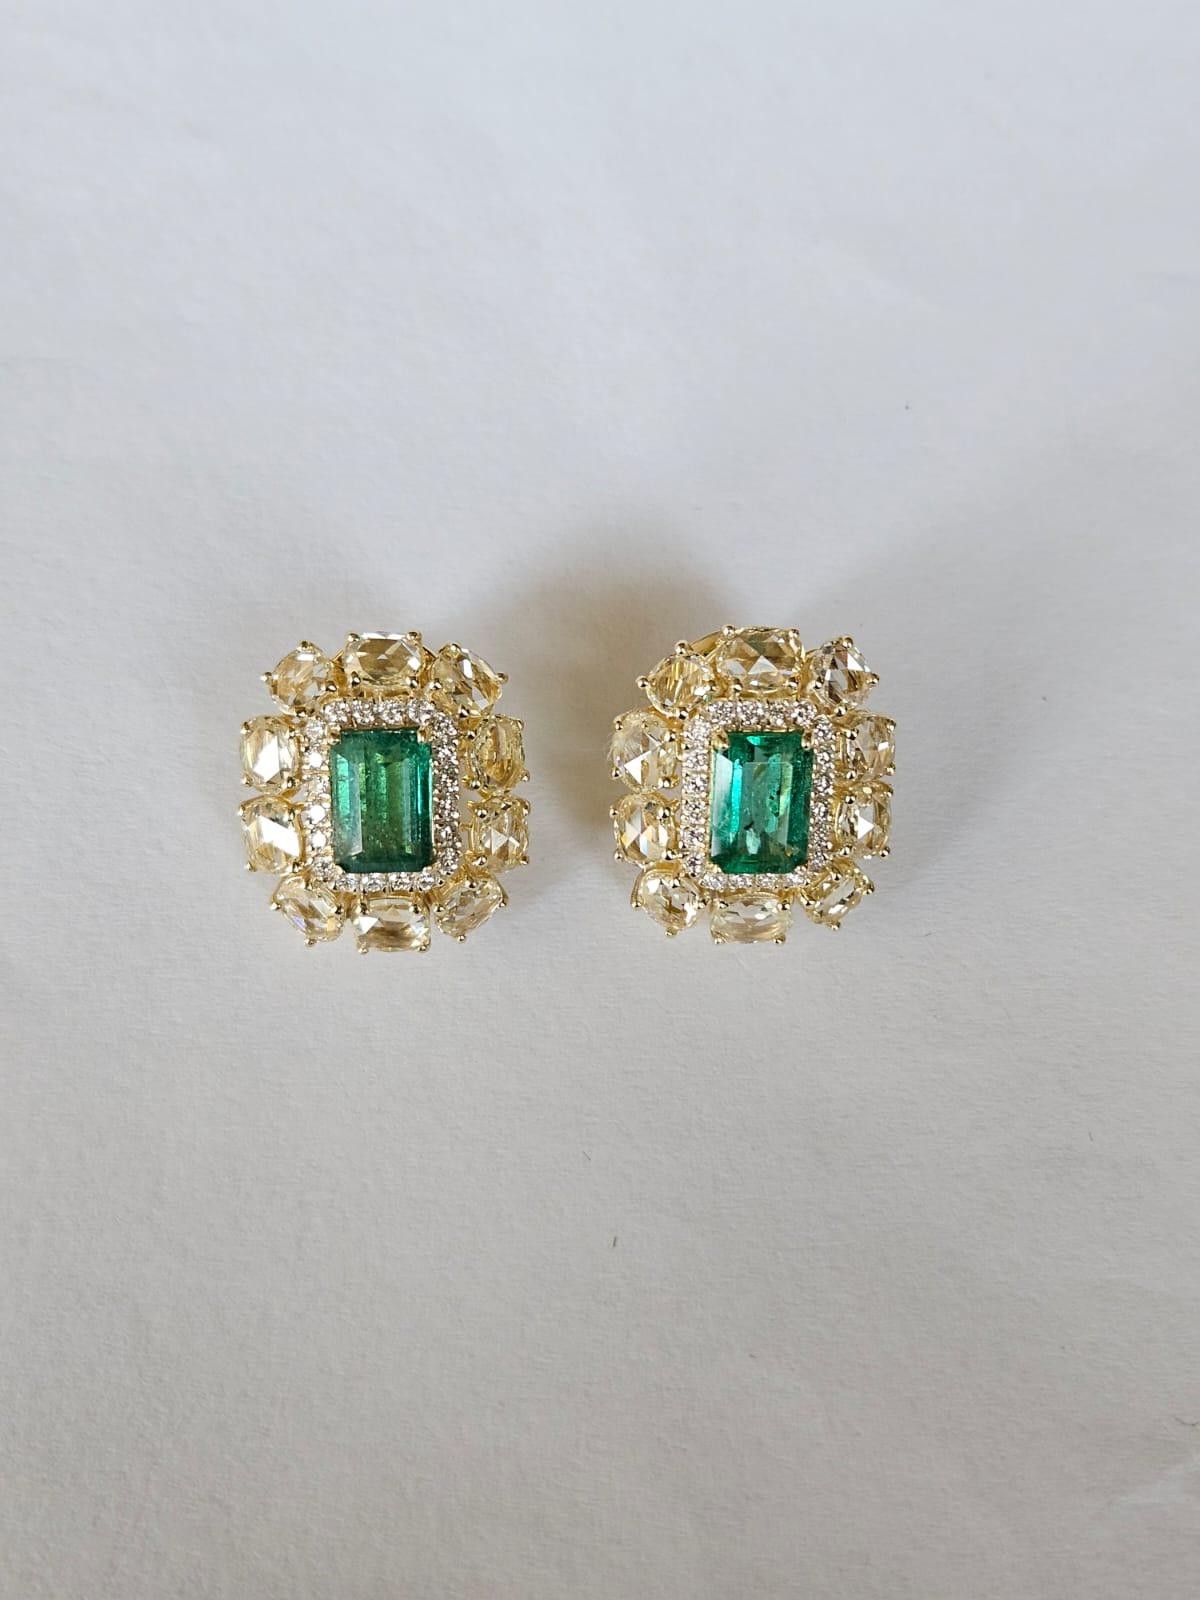 Set in 18K Gold, 3.41 carats, Zambian Emerald & Yellow Diamonds stud Earrings 2